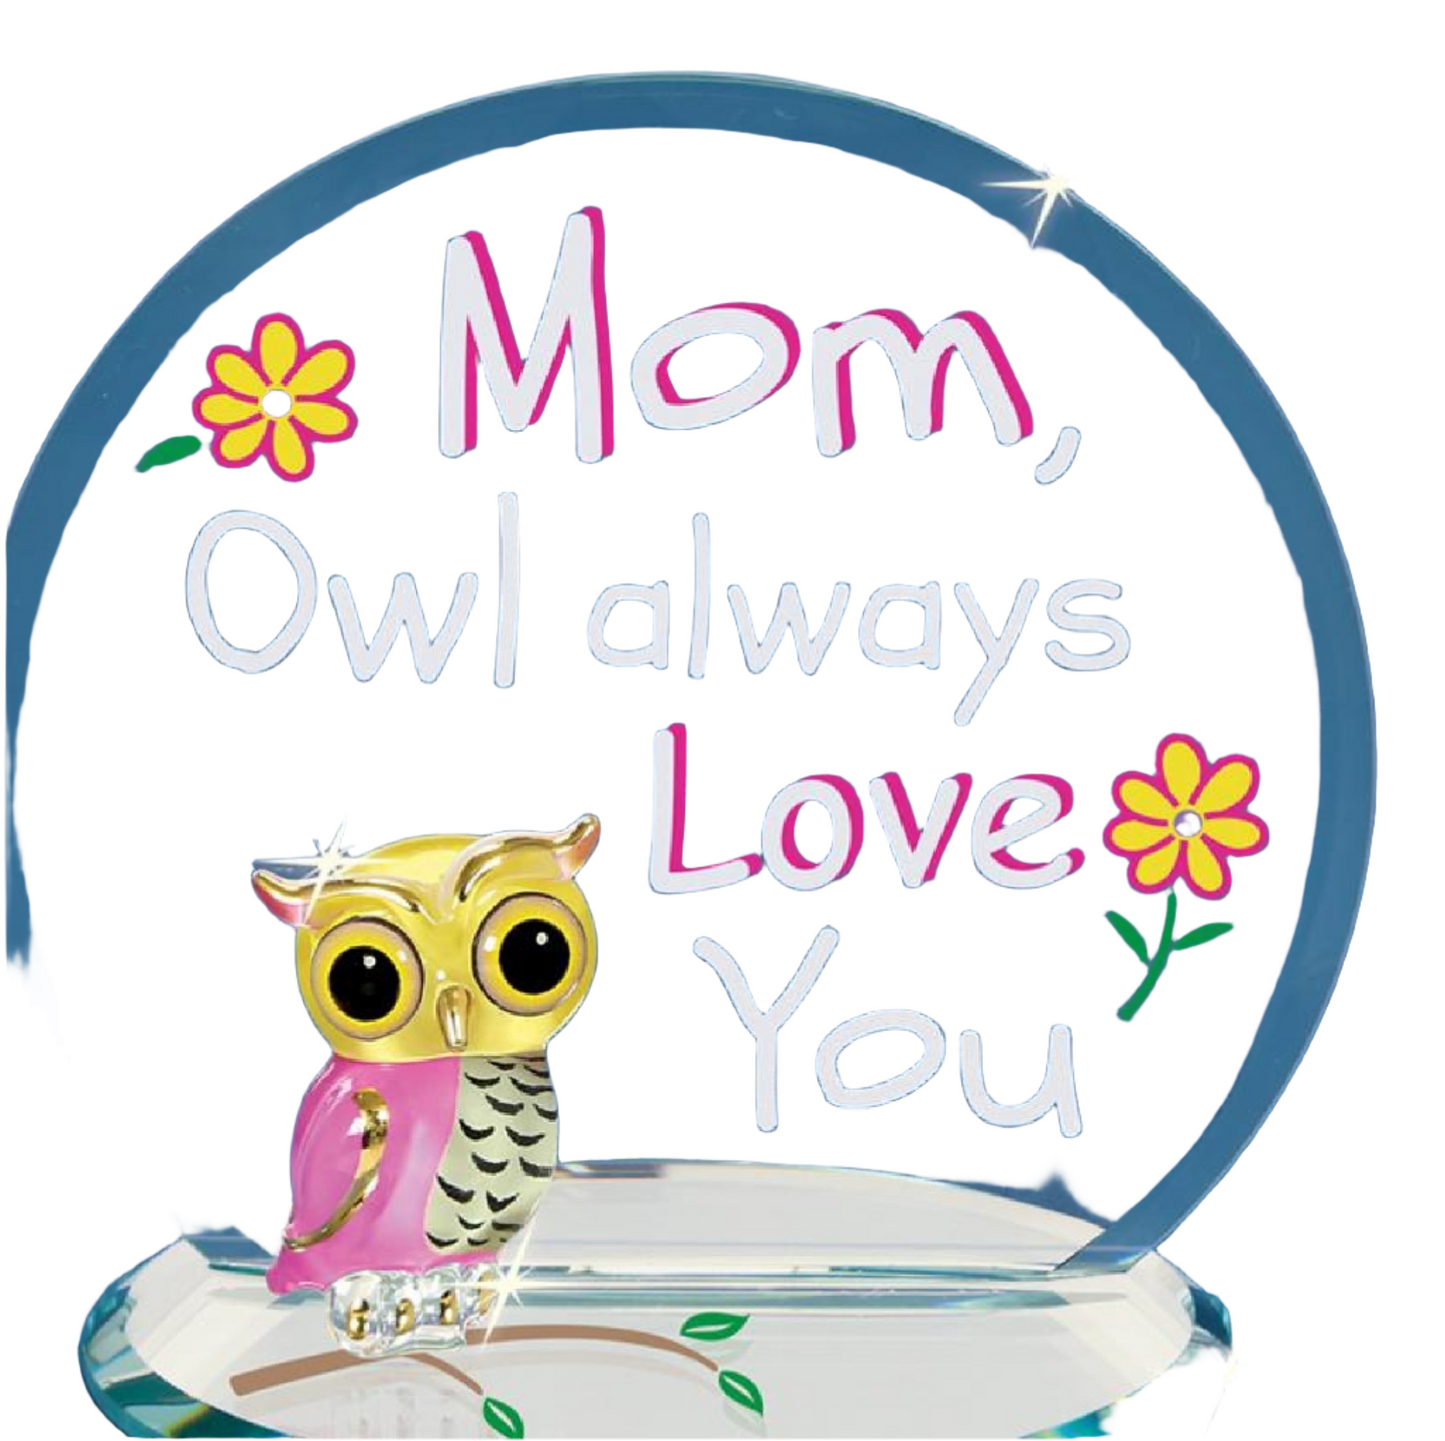 Glass Baron Mom "Owl Always Love You" Plaque